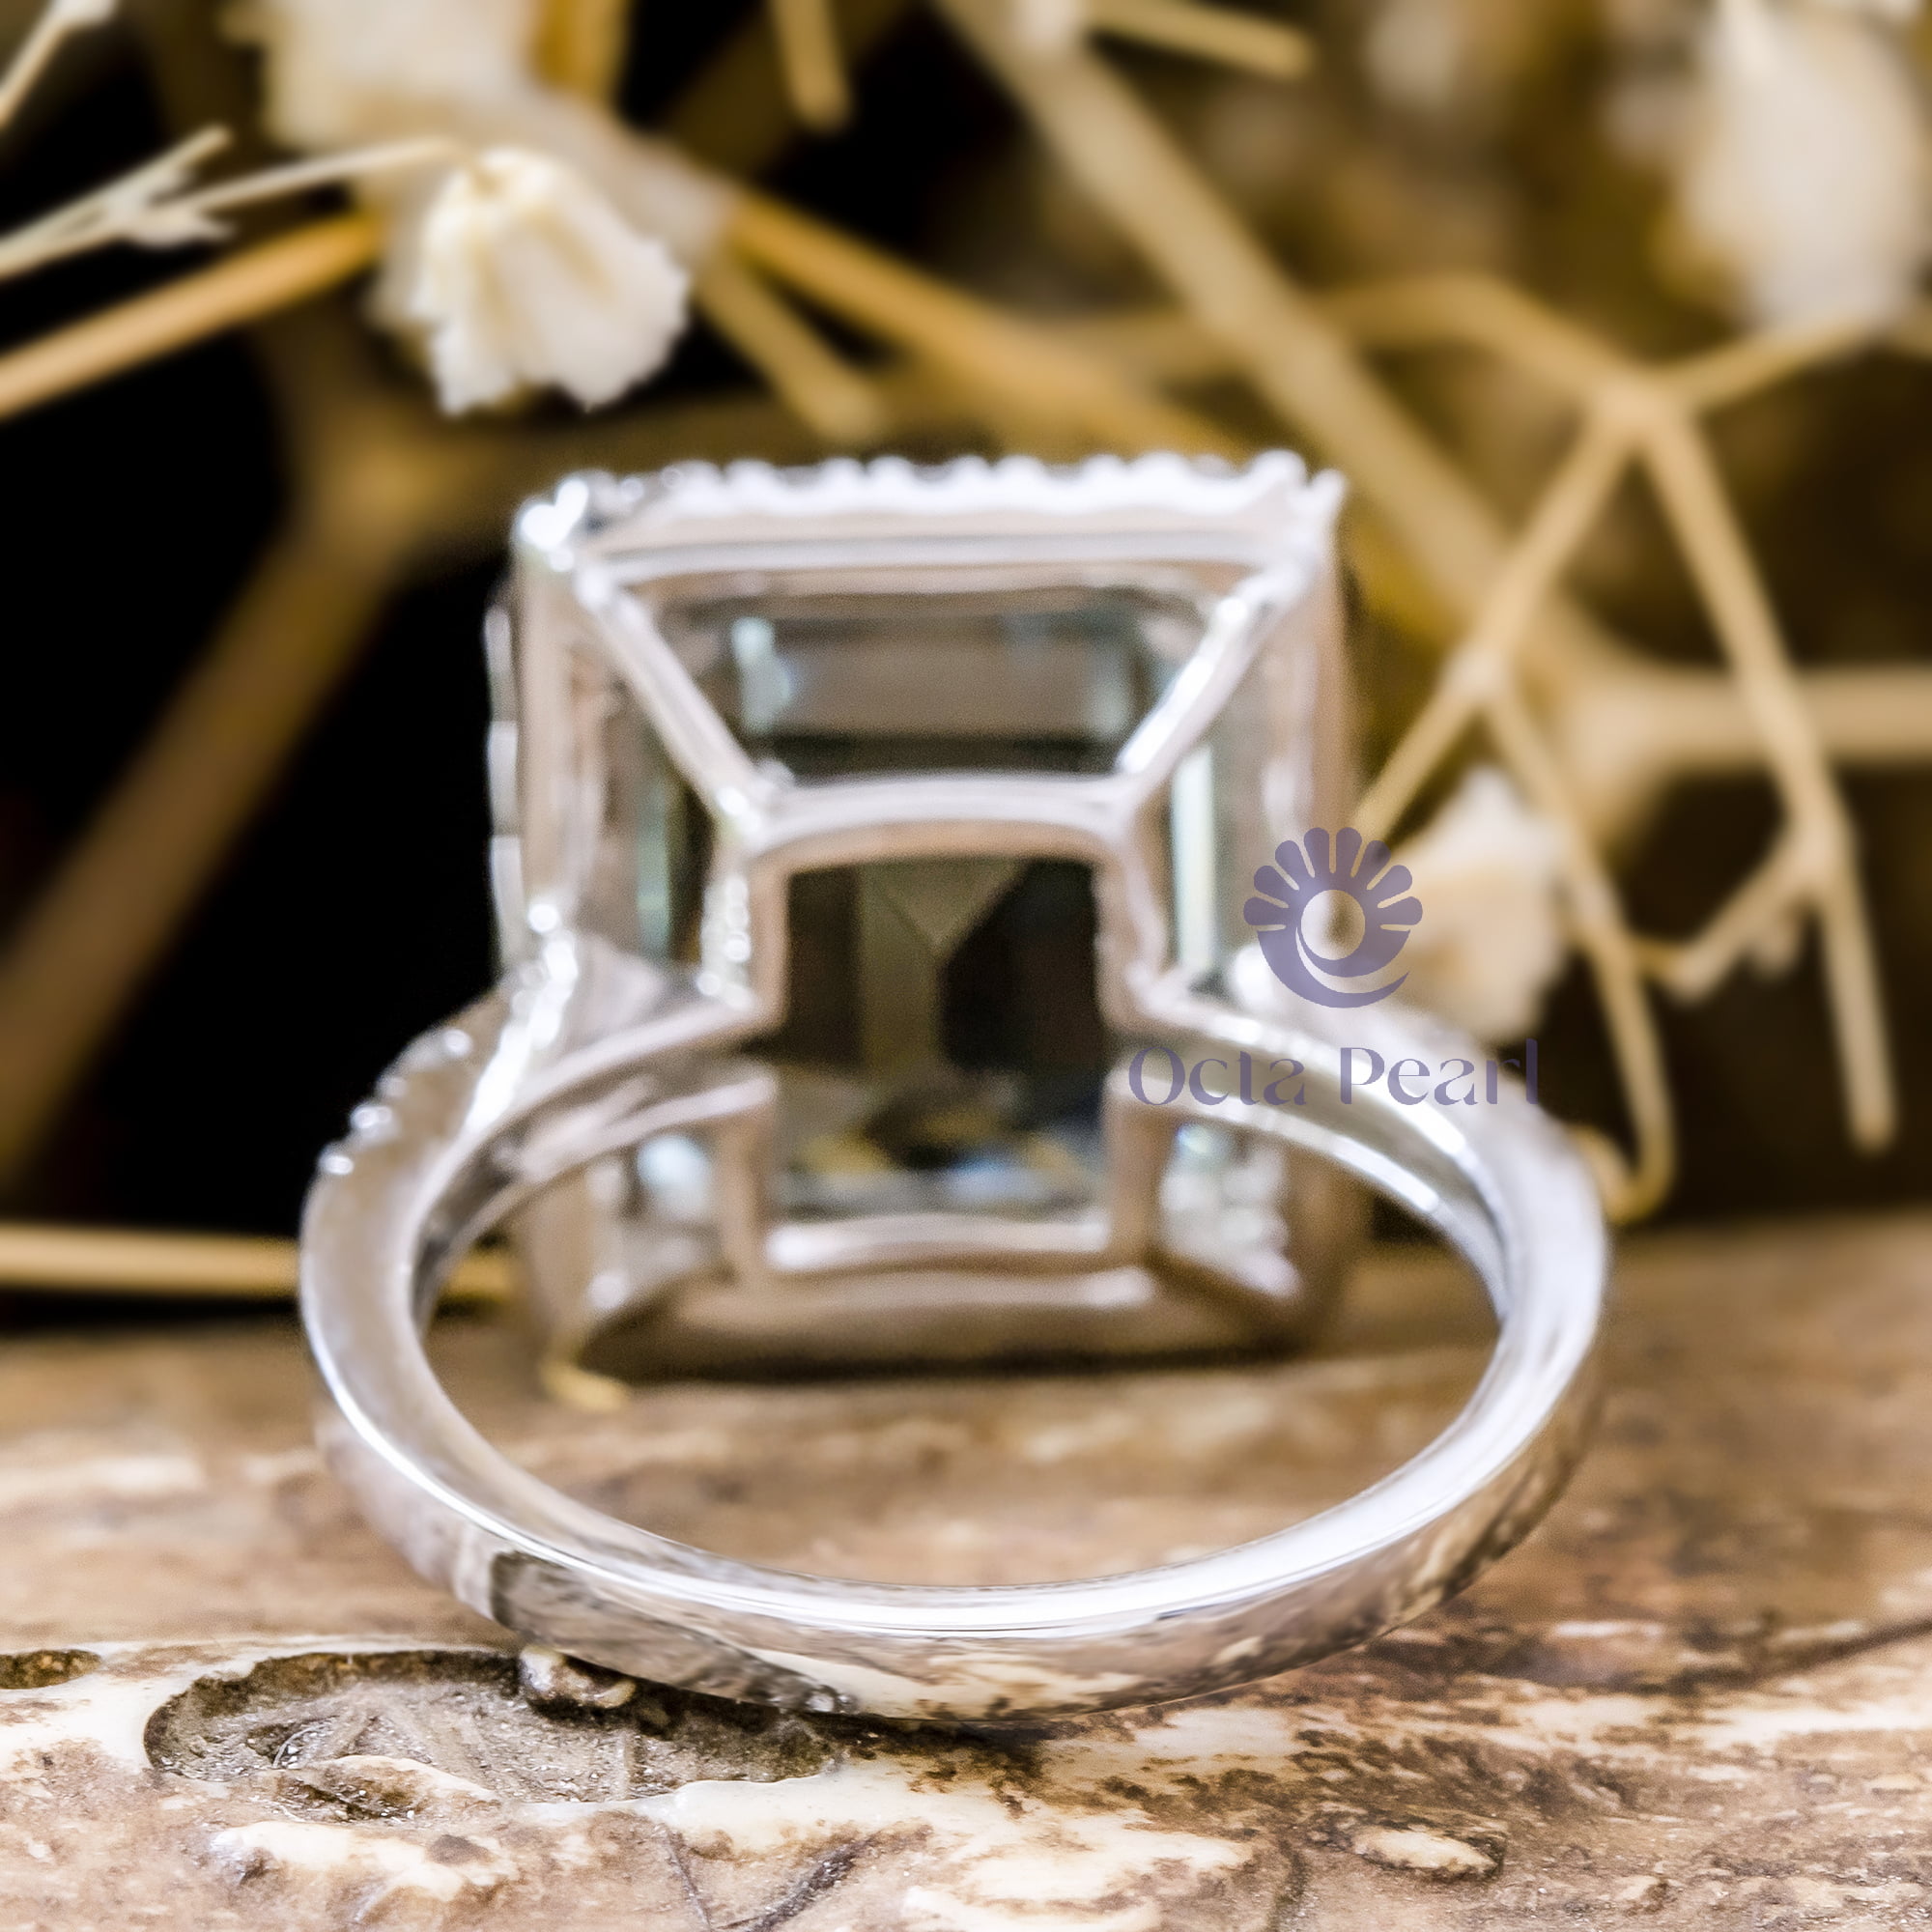 Emerald Cut Aqua-Blue Stone Halo Engagement Ring For Women